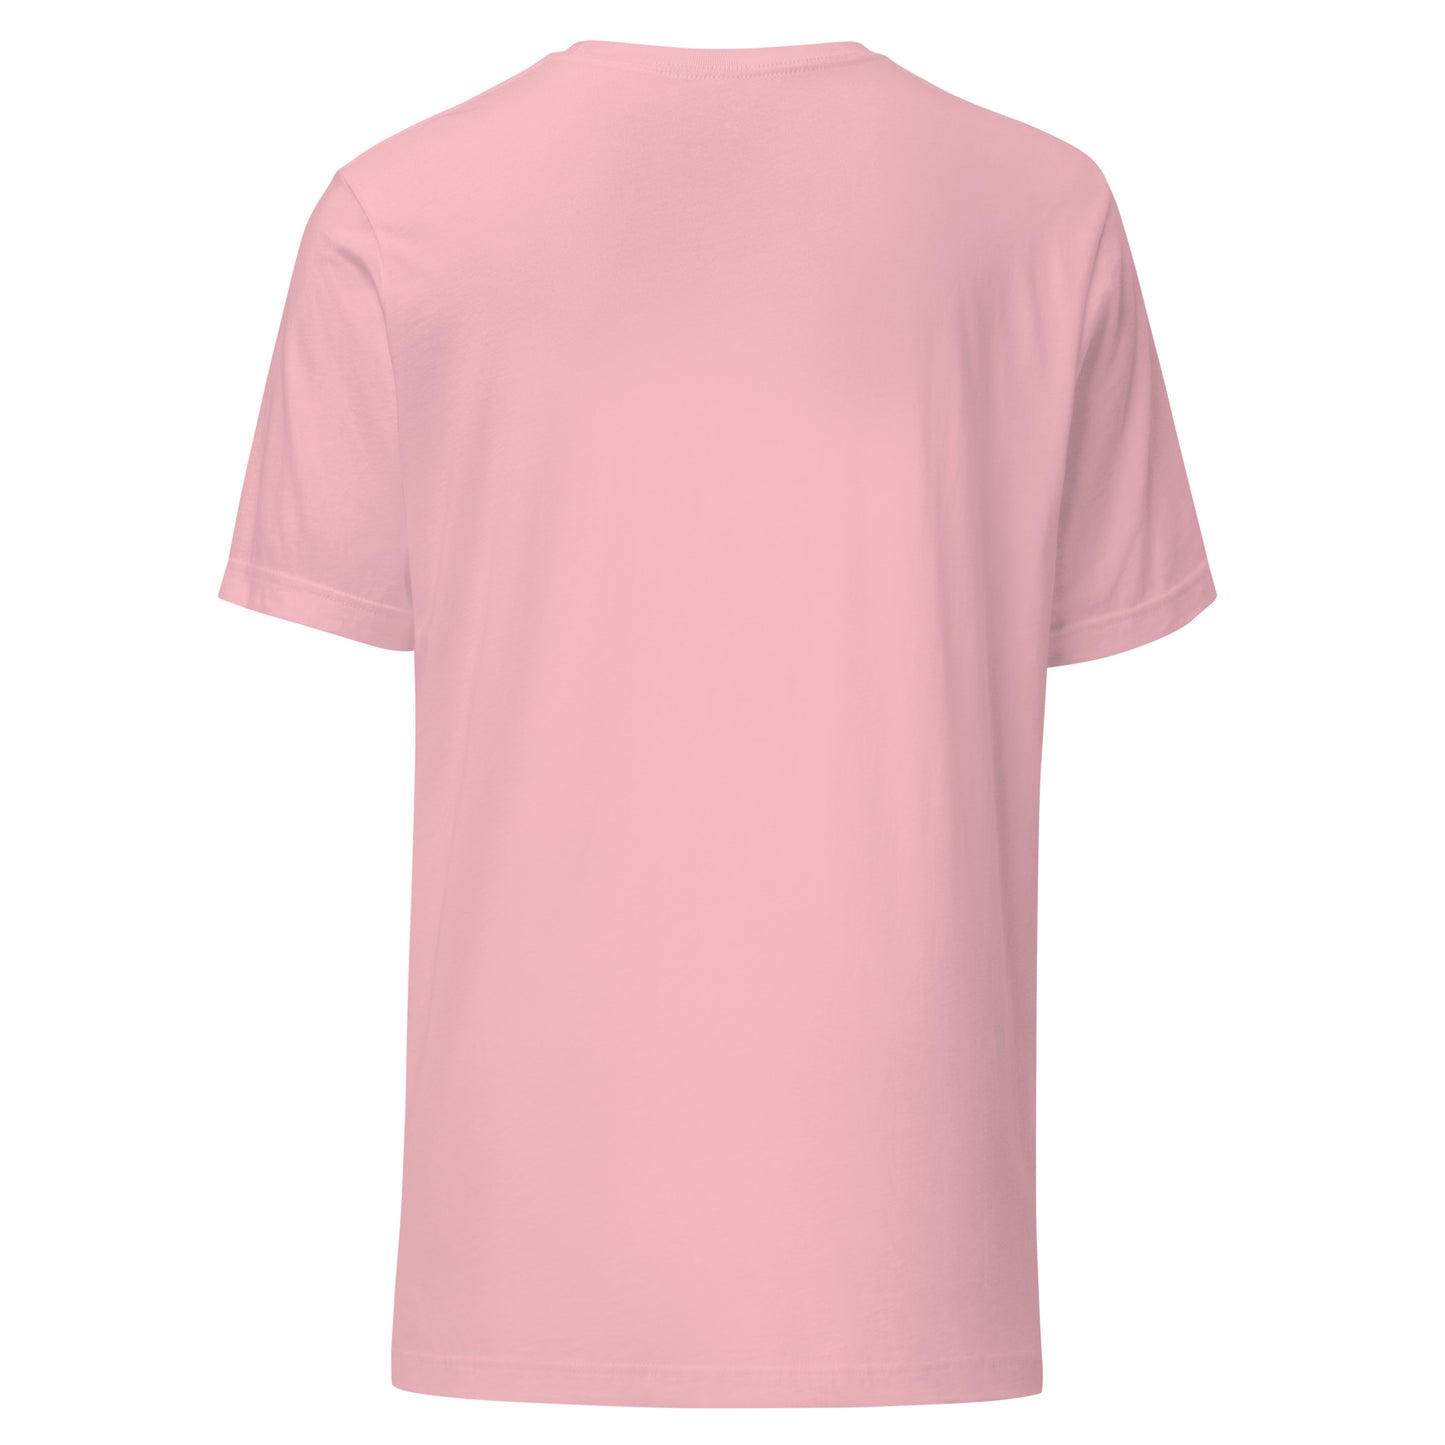 T-Shirt Adult Unisex (Pink, Yellow, White)